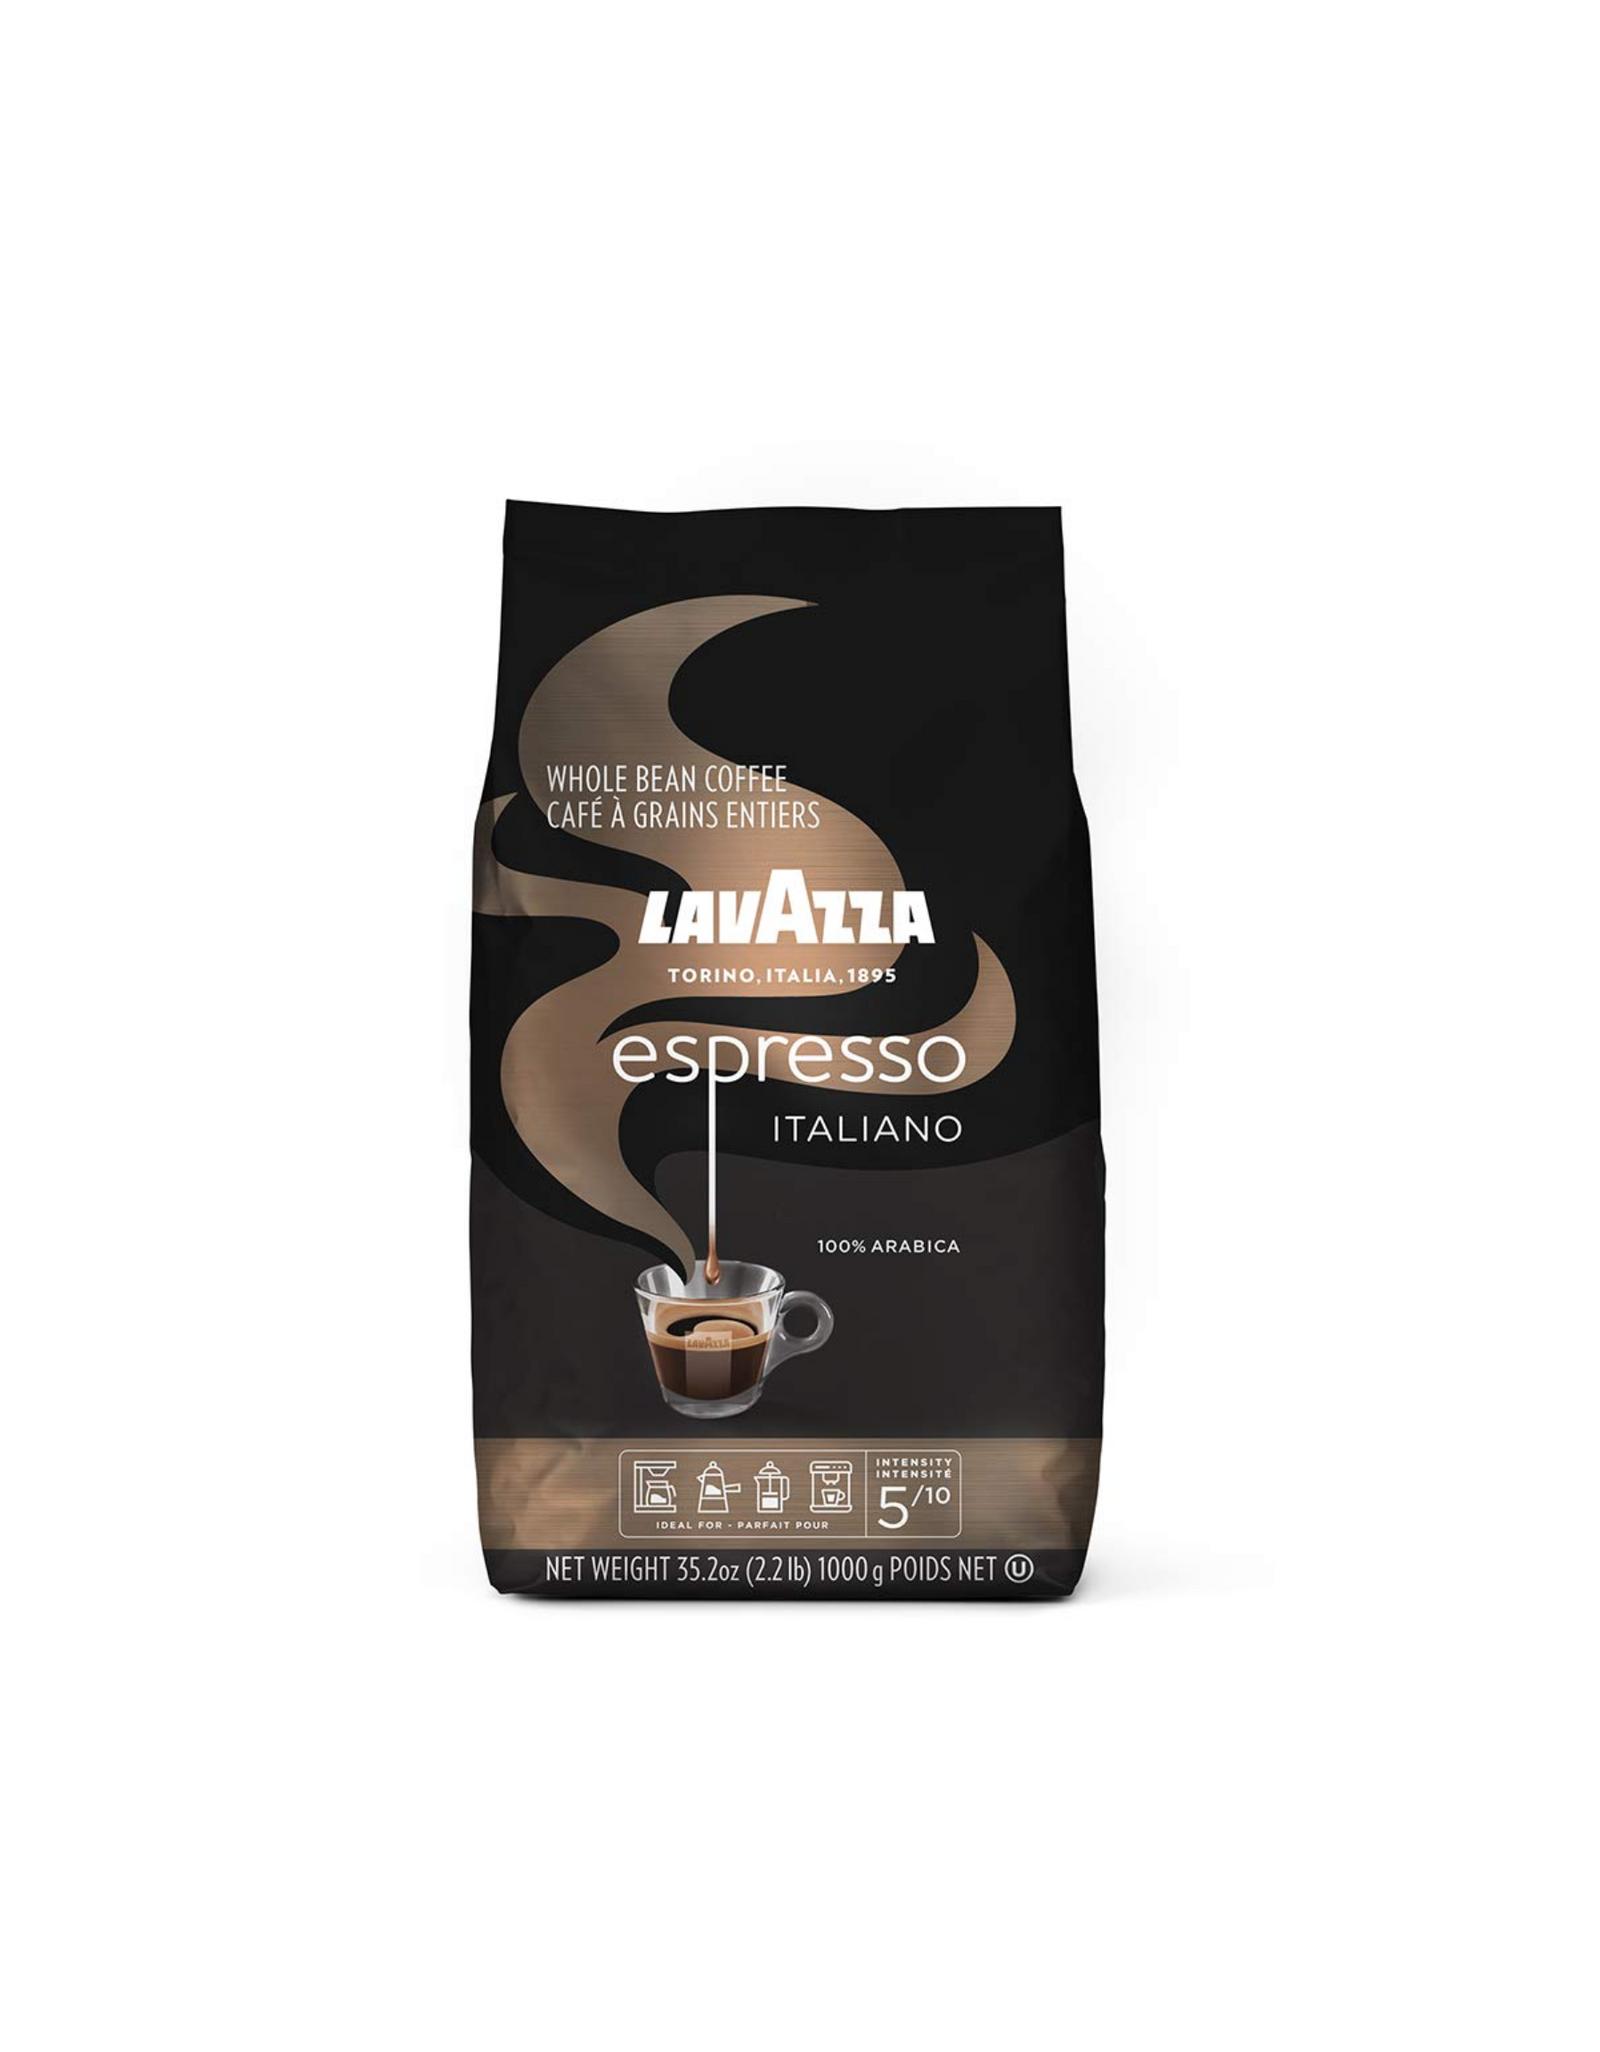 Lavazza Espresso Italiano Whole Bean Coffee Blend, Medium Roast, 35.2 oz (2.2 lb)